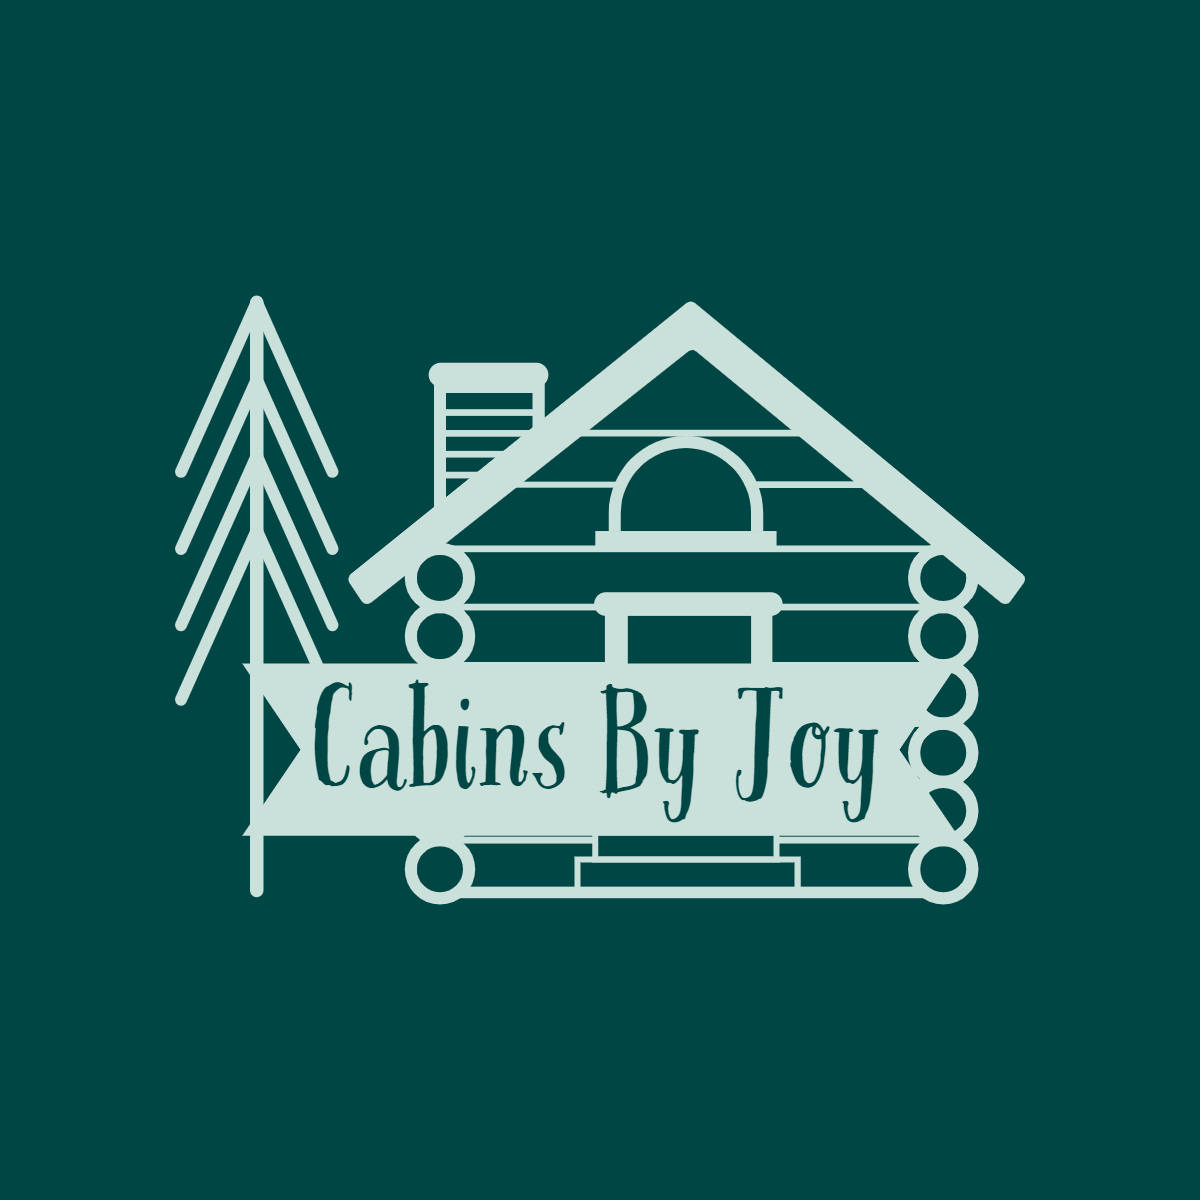 Cabins by Joy